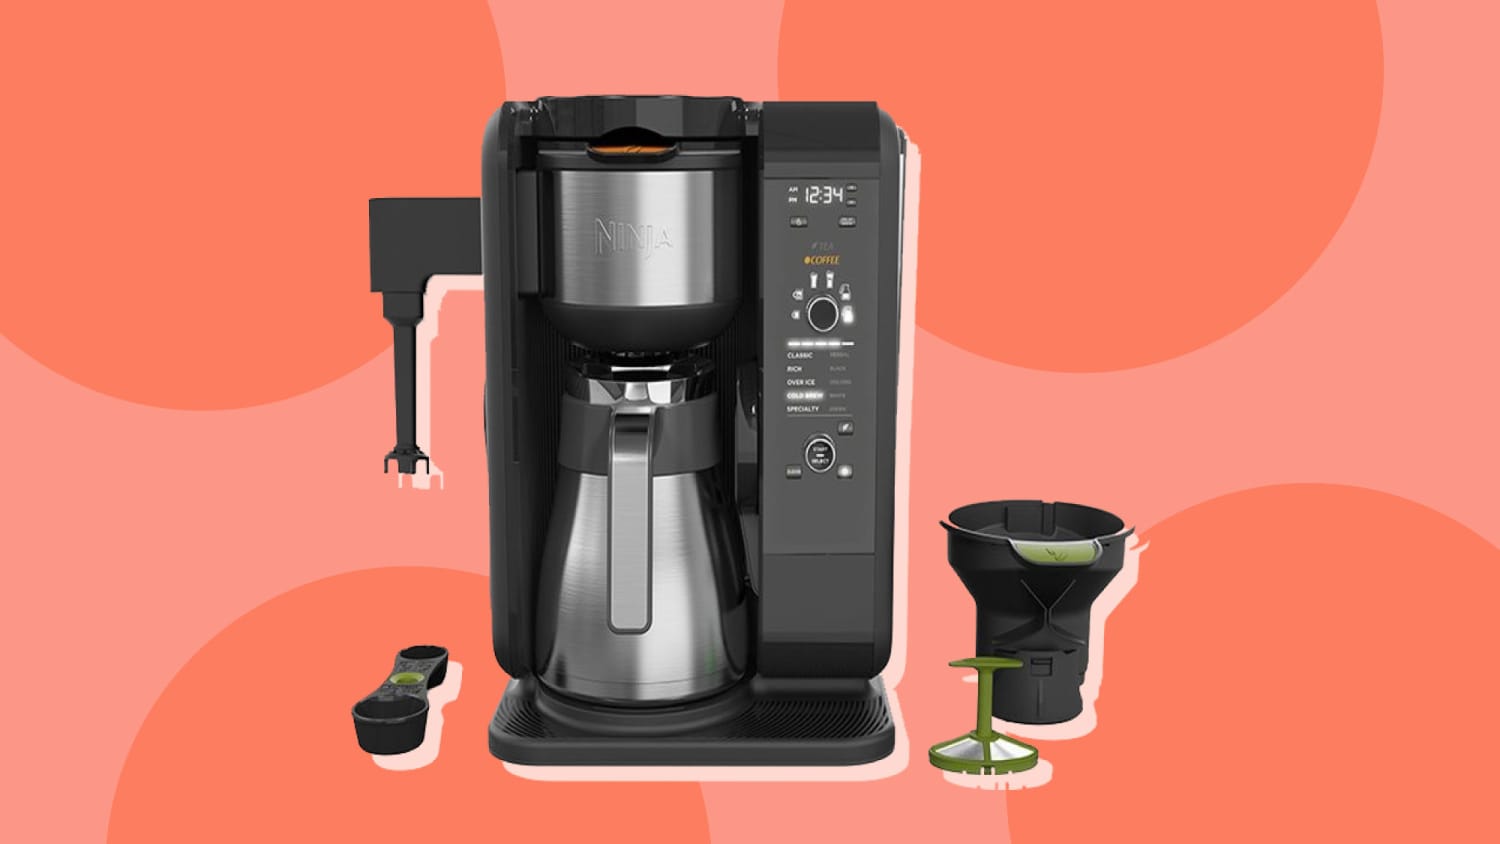 Does the Ninja Coffee Maker Brew Real Espresso?